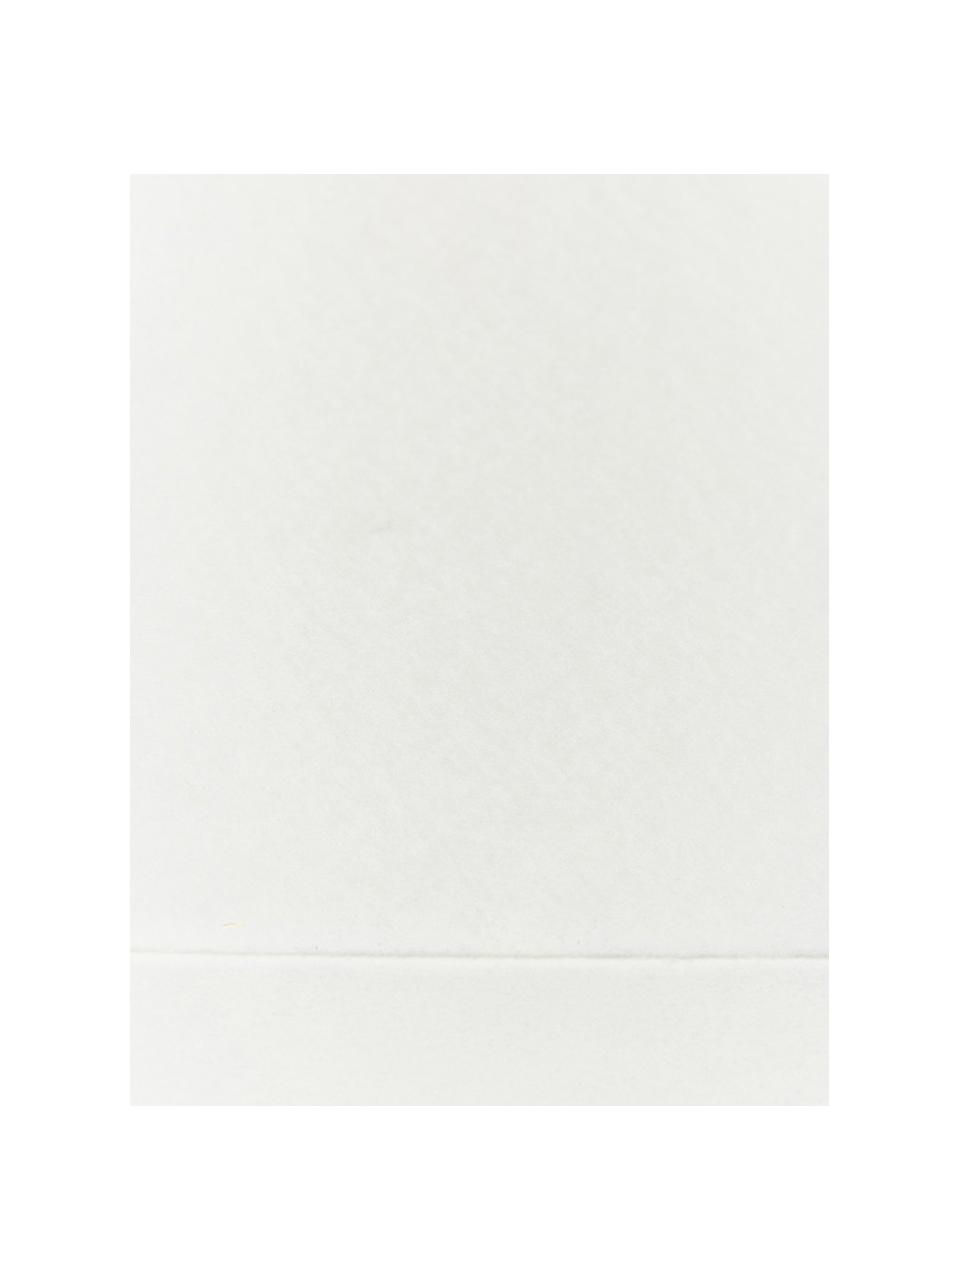 Onderlaag van vlies voor vloerkleed My Slip Stop van polyester vlies, Polyestervlies met anti-sliplaag, Wit, B 150 x L 220 cm